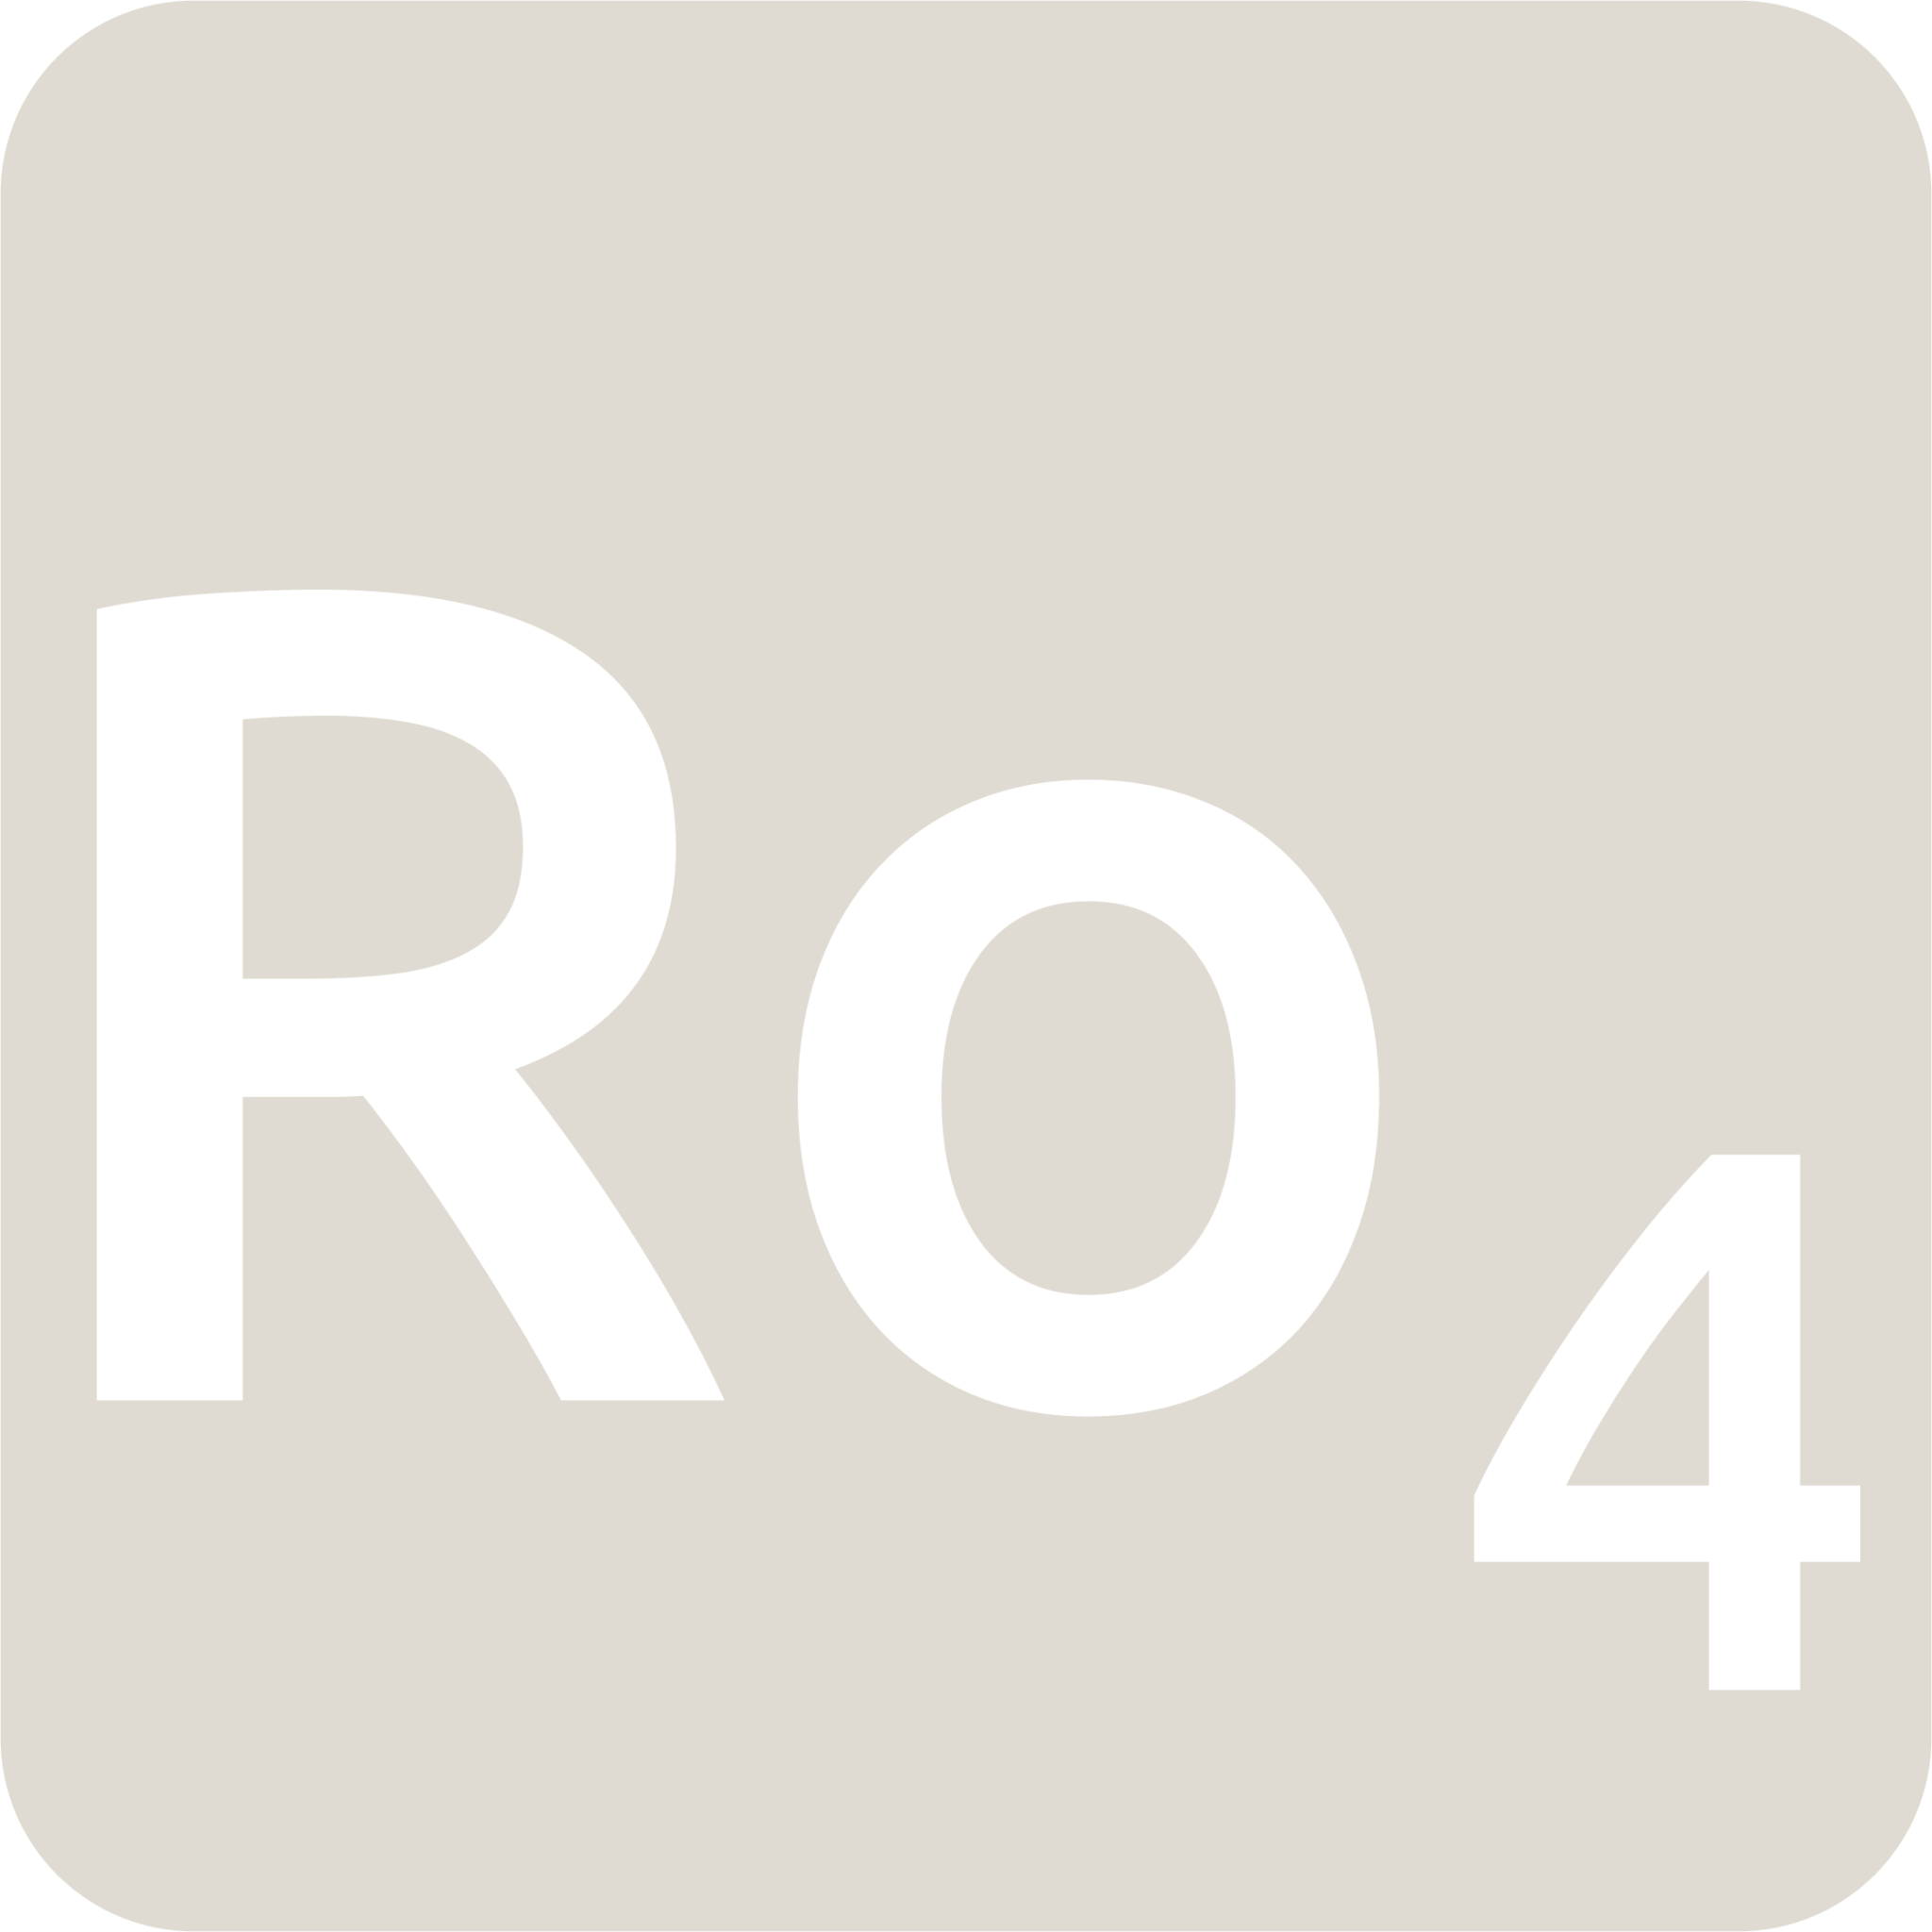 indicator keyboard Ro 4 icon